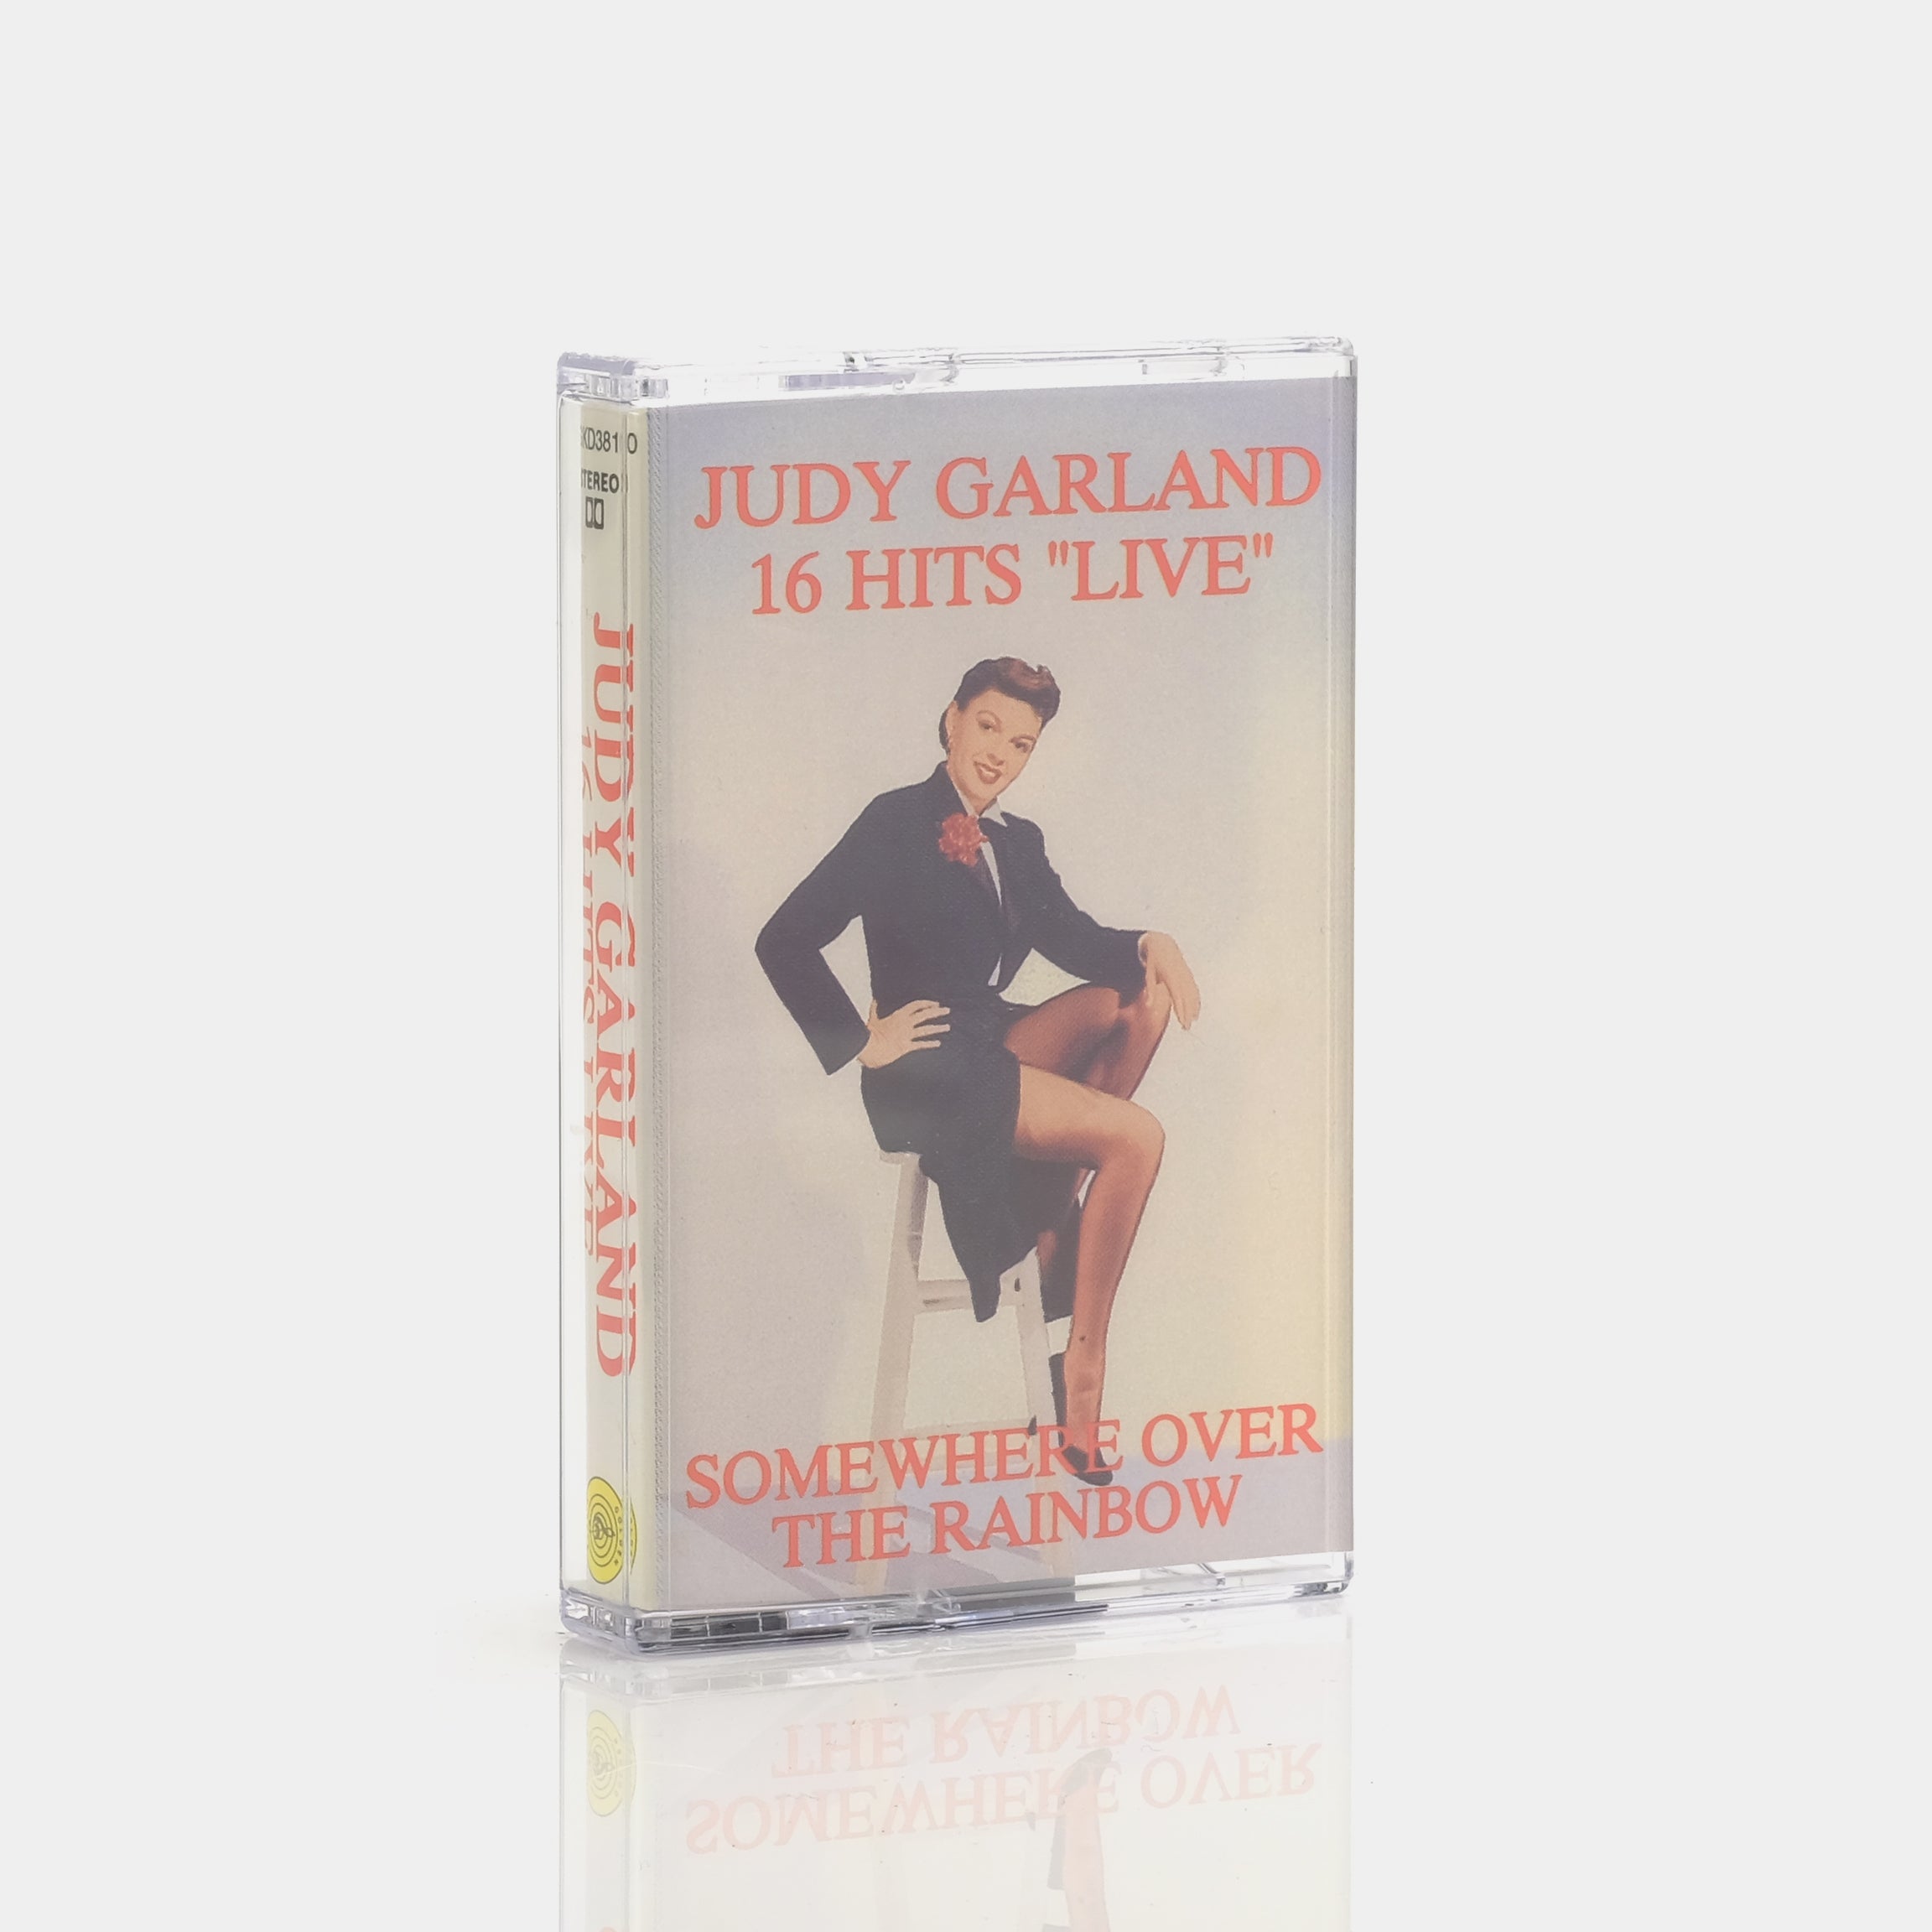 Judy Garland - 16 Hits "Live" Cassette Tape